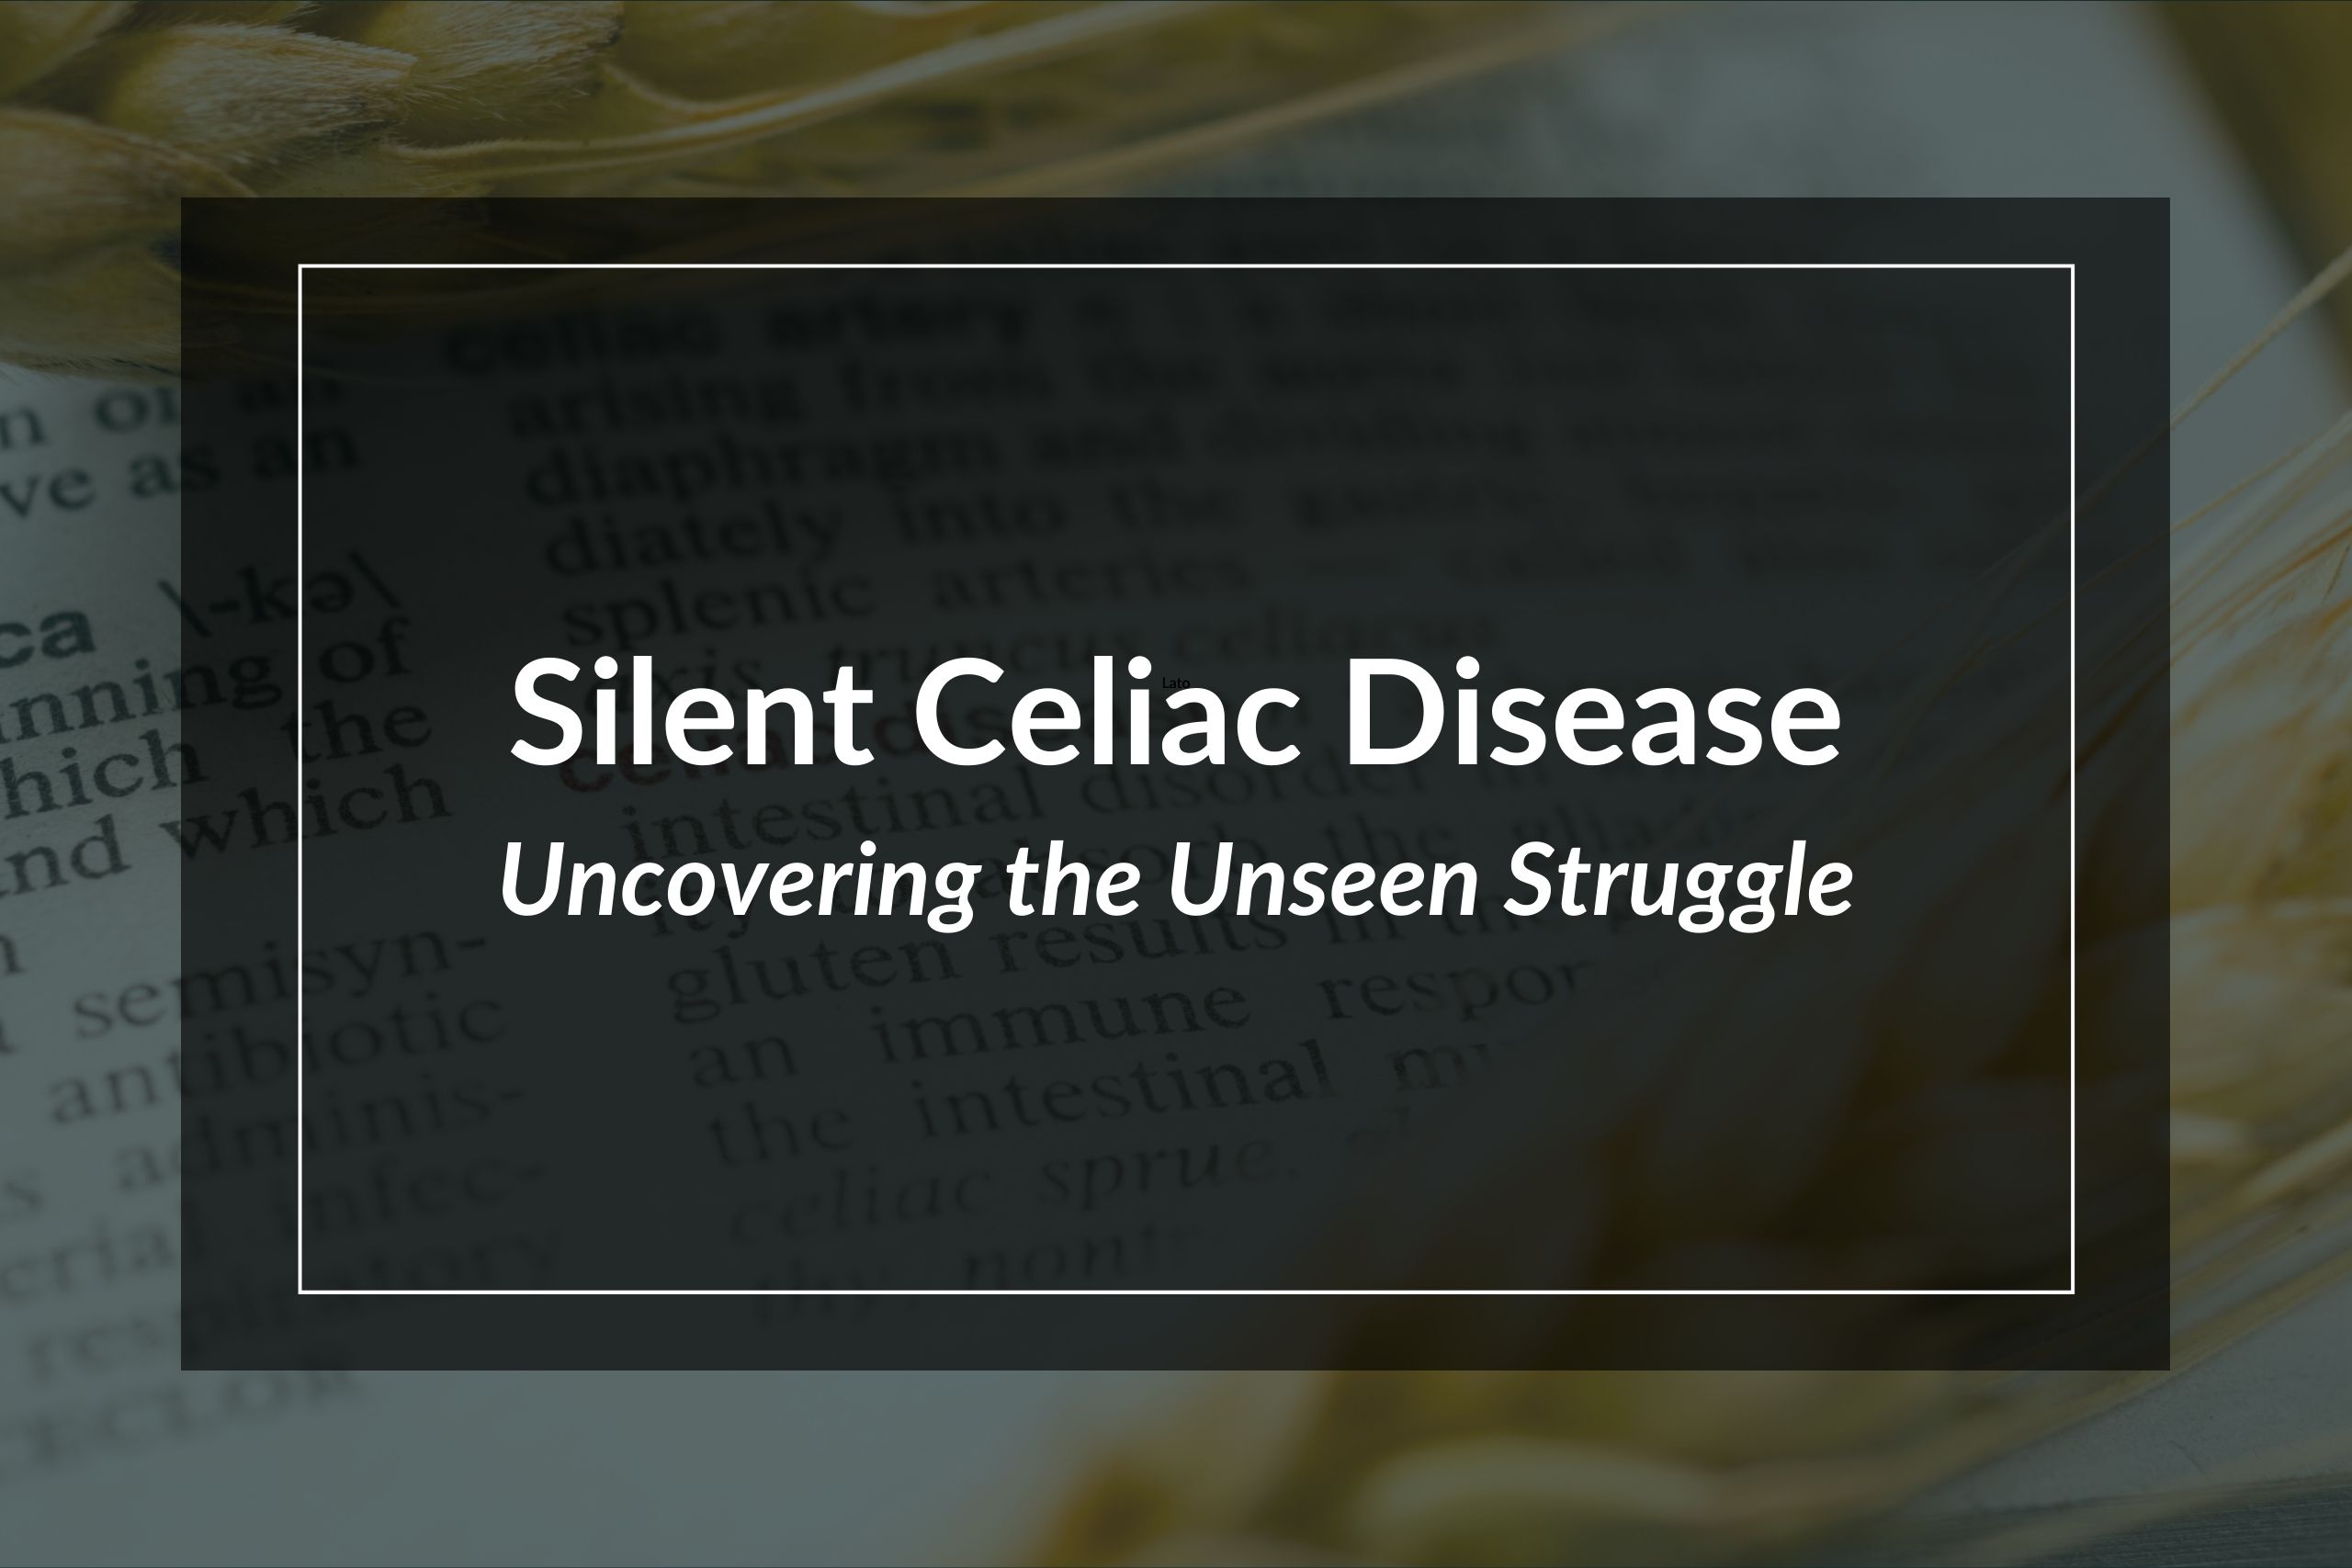 About Silent Celiac Disease